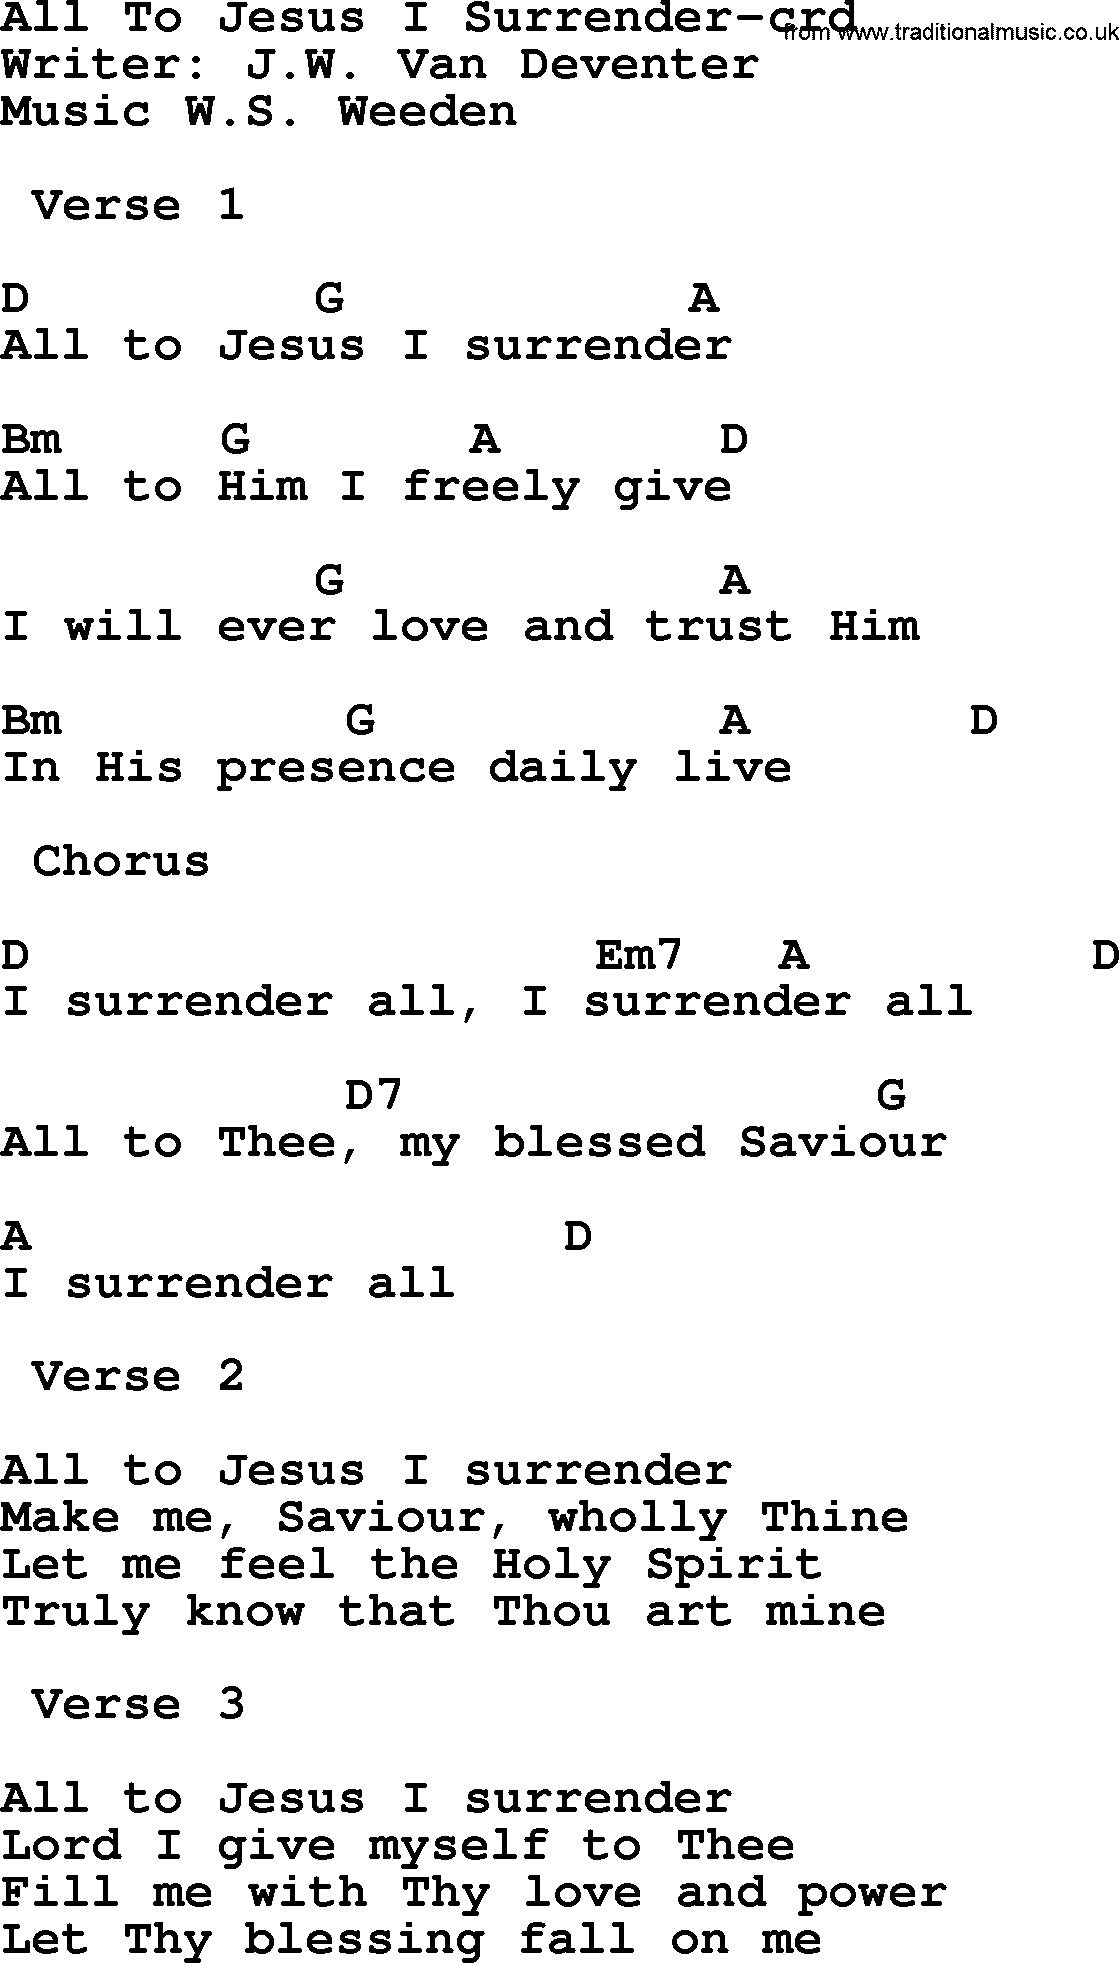 I surrender lyrics